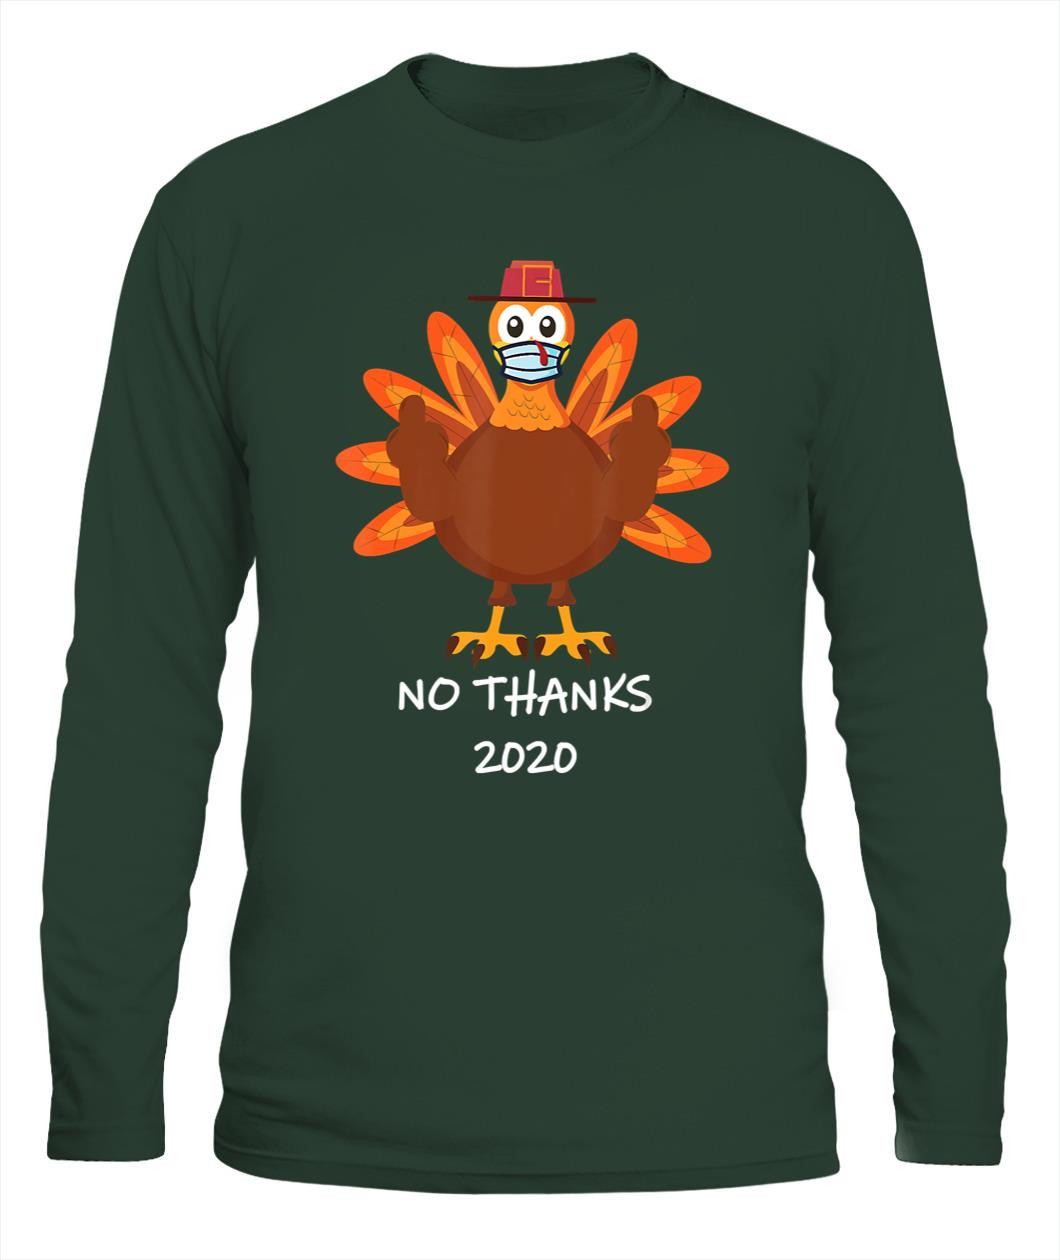 Turkey For Thanksgiving 2020
 Thanksgiving 2020 Turkey No Thanks – Turkey Face Mask T